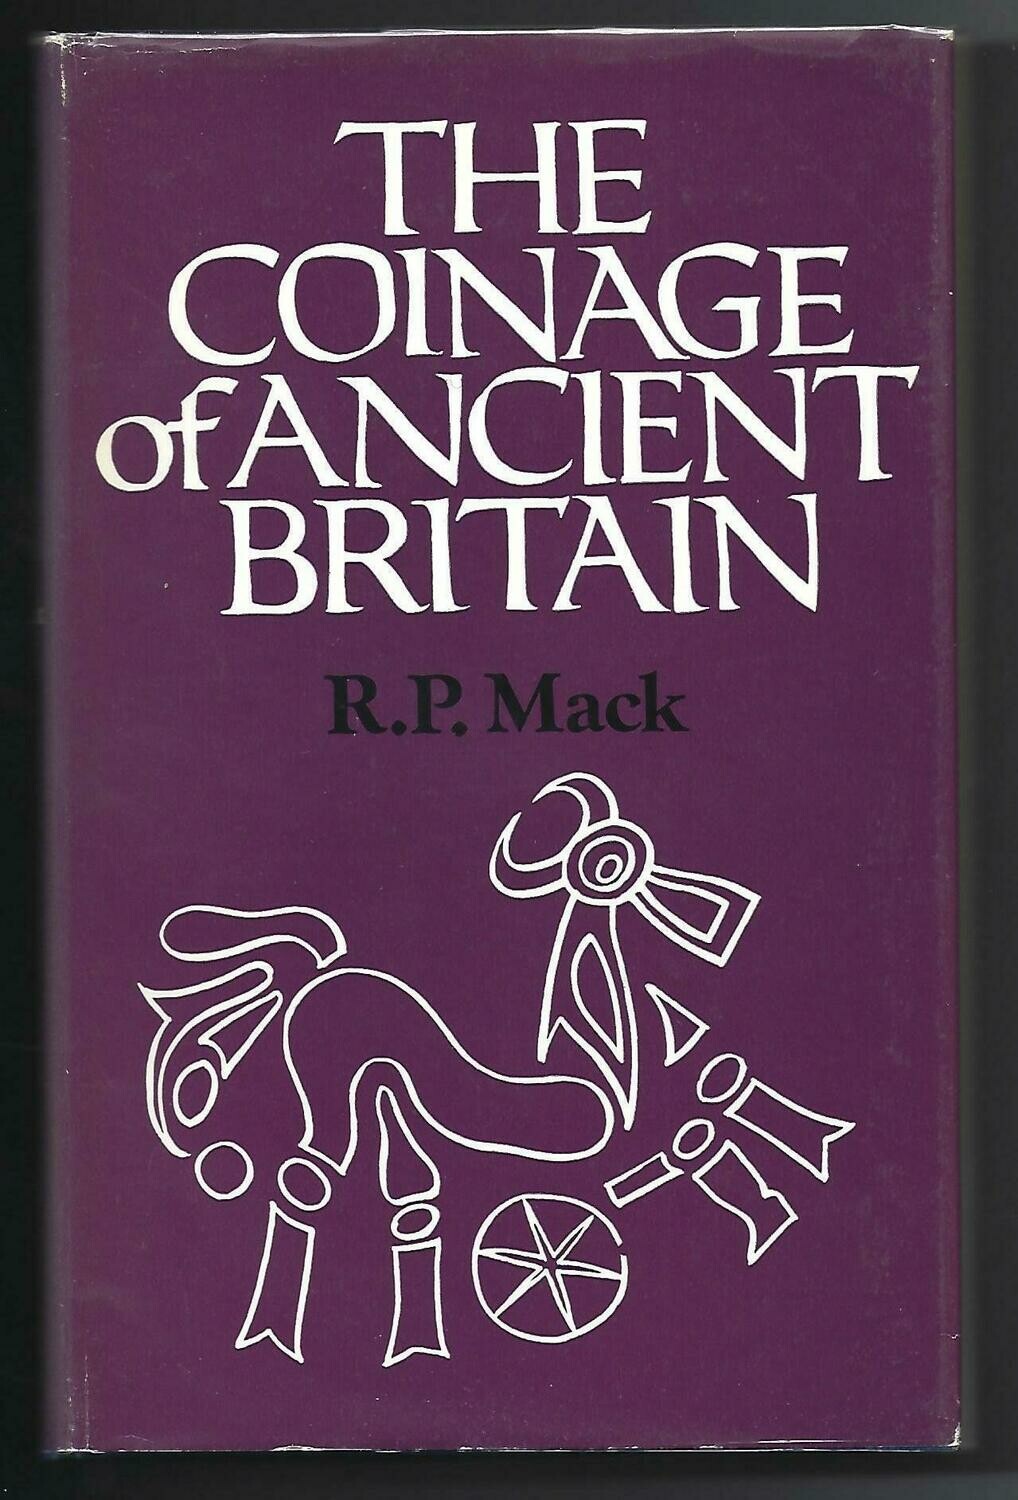 British; R.P. Mack, "The Coinage of Ancient Britain."